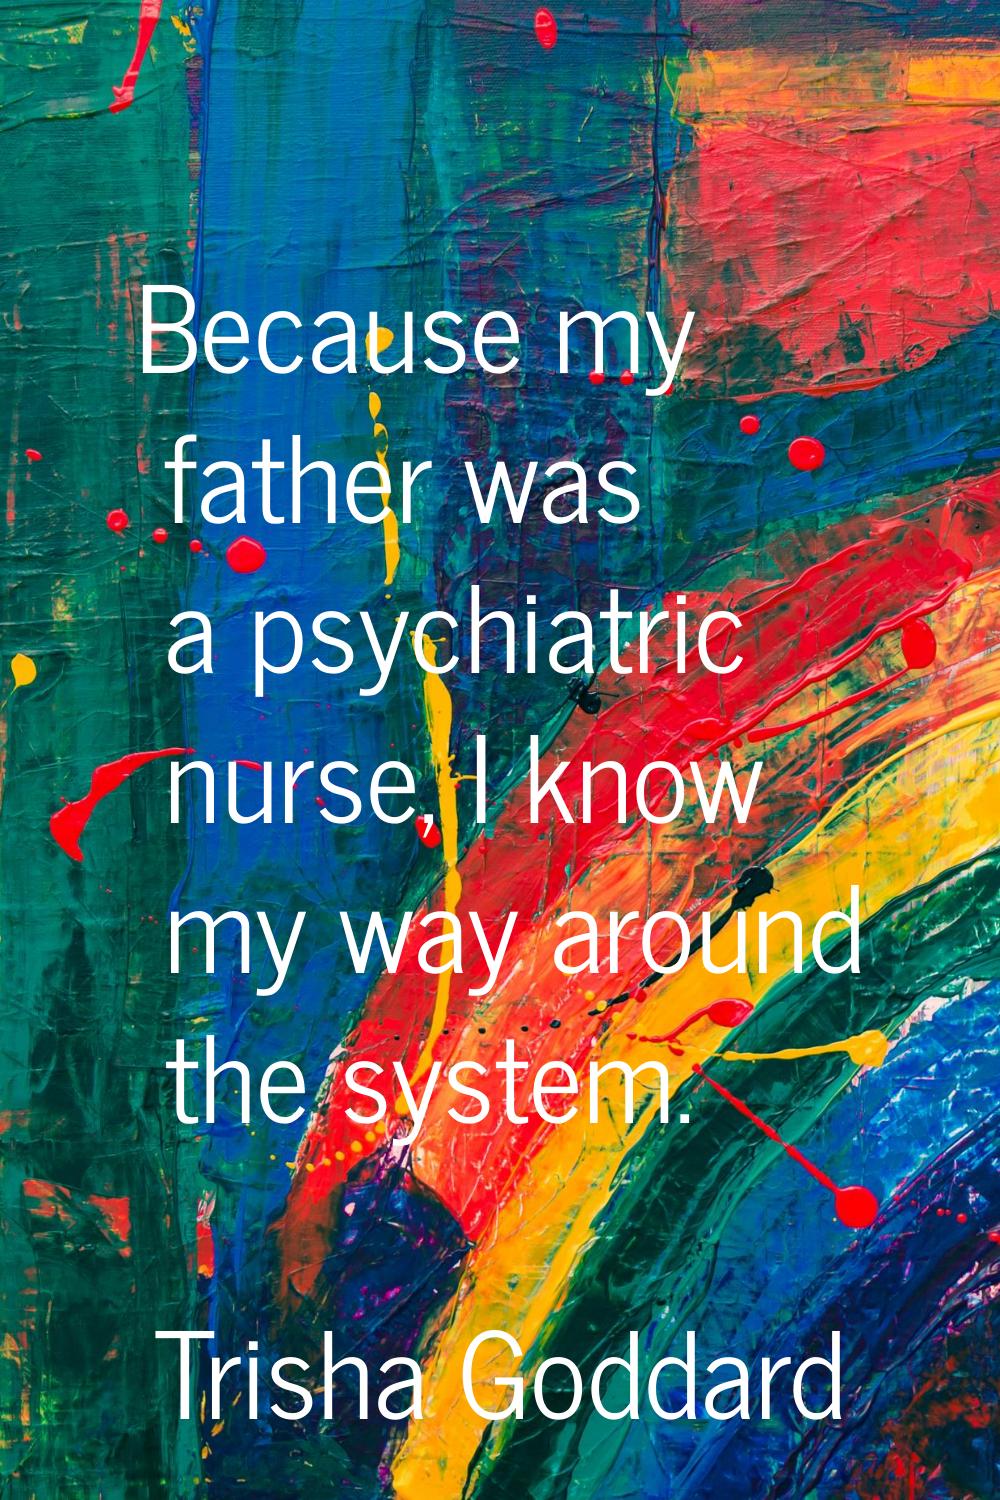 Because my father was a psychiatric nurse, I know my way around the system.